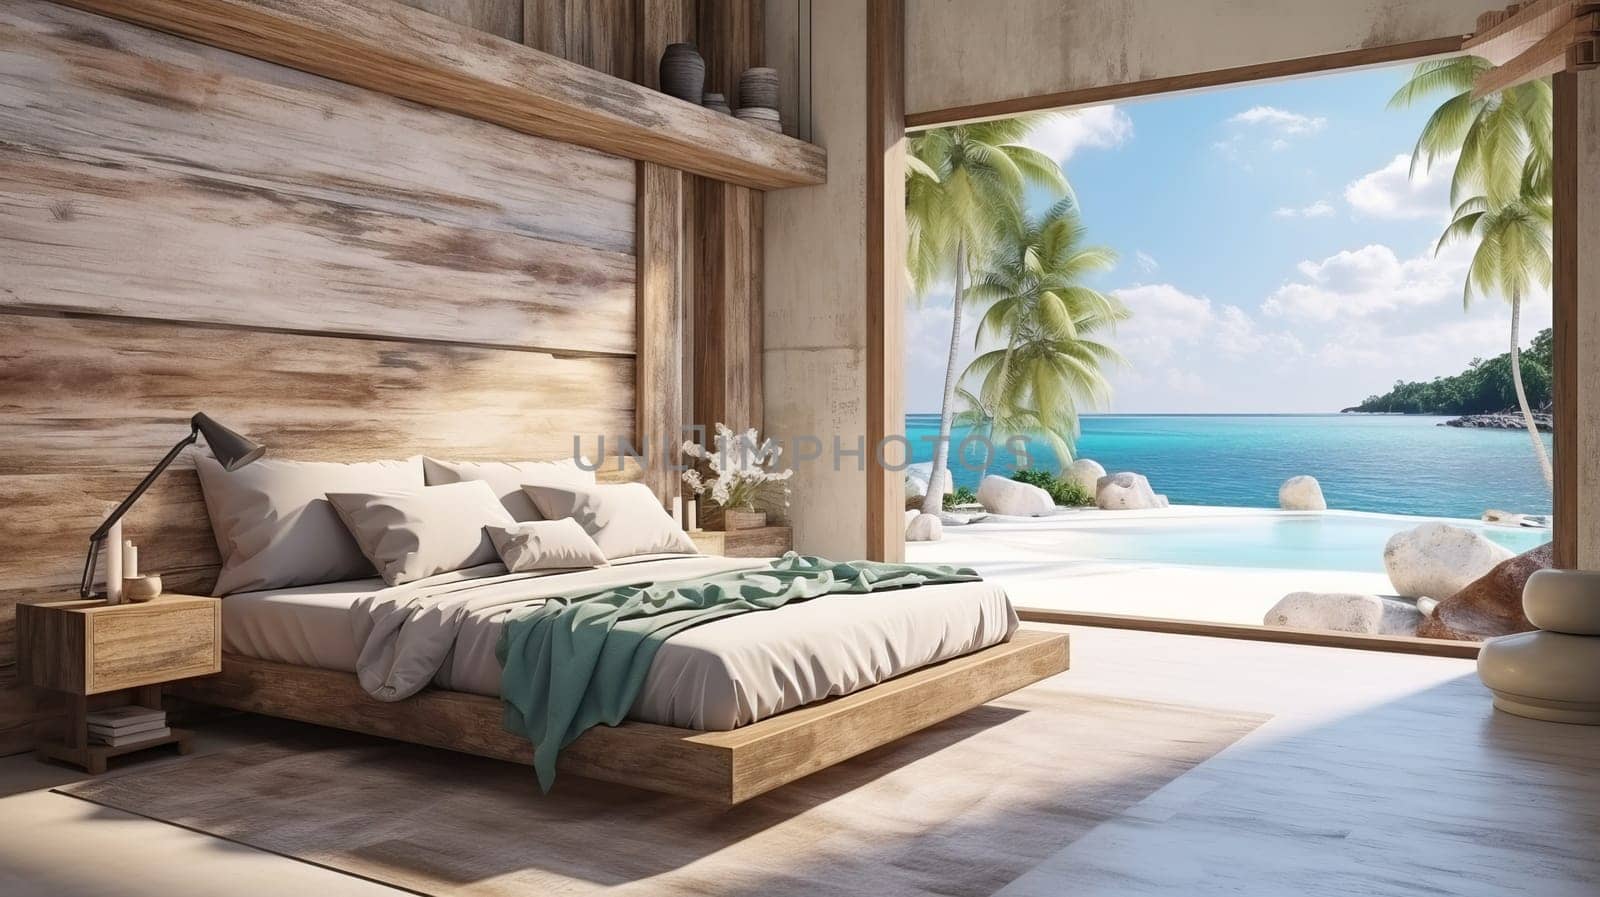 Luxury Hotel Modern interior bedroom with large windows. Summer scene ocean side. Summer, travel, vacation, dreams holiday, resort.